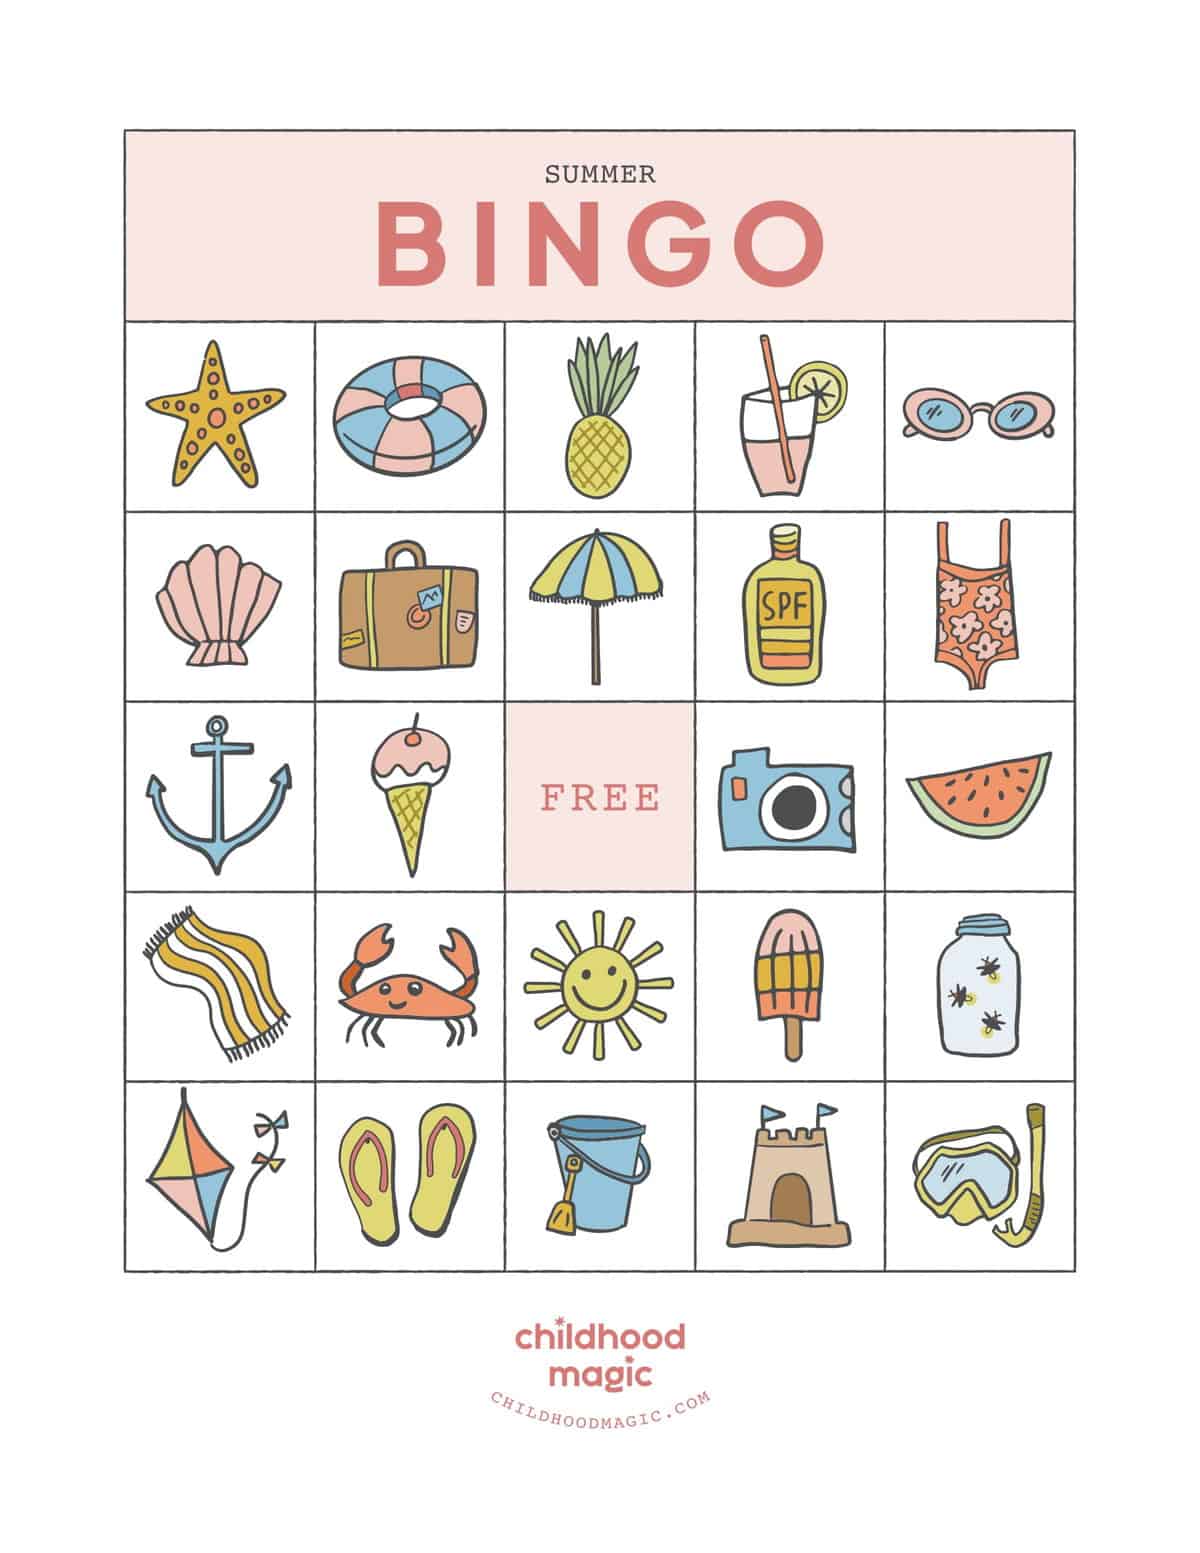 summer-themed bingo card in color.